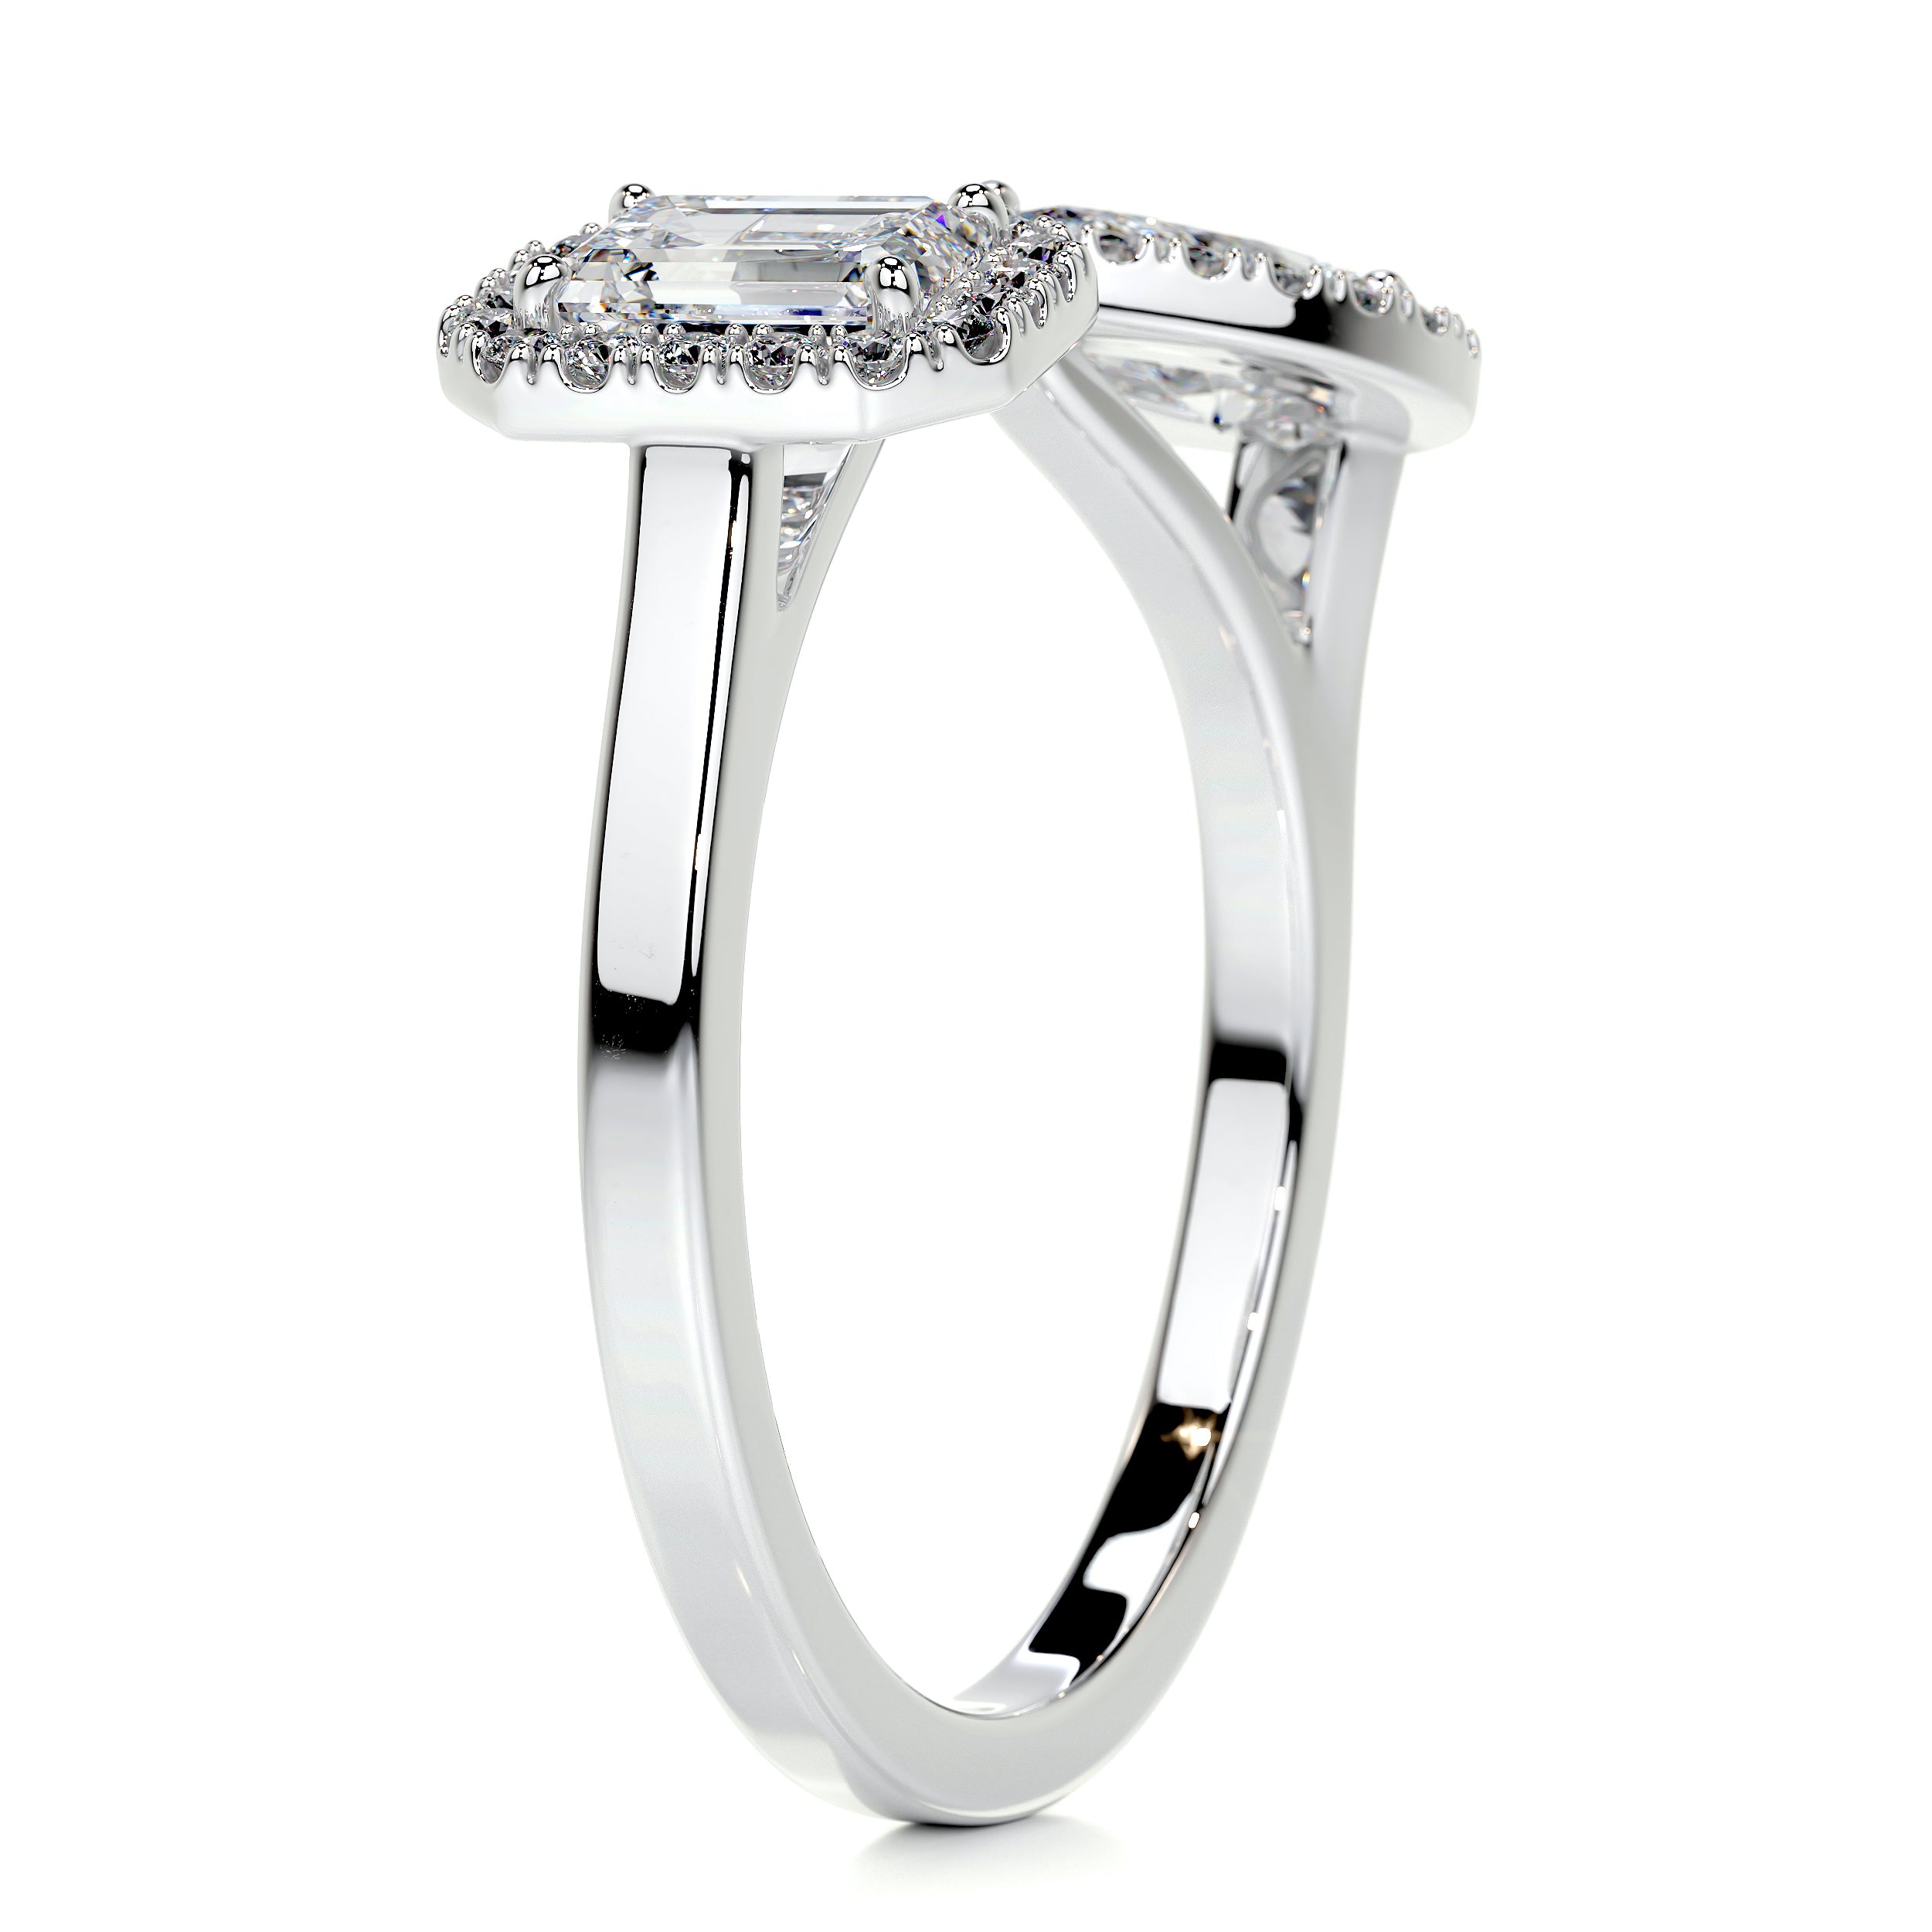 Edith Designer Diamond Ring   (1.2 Carat) -14K White Gold